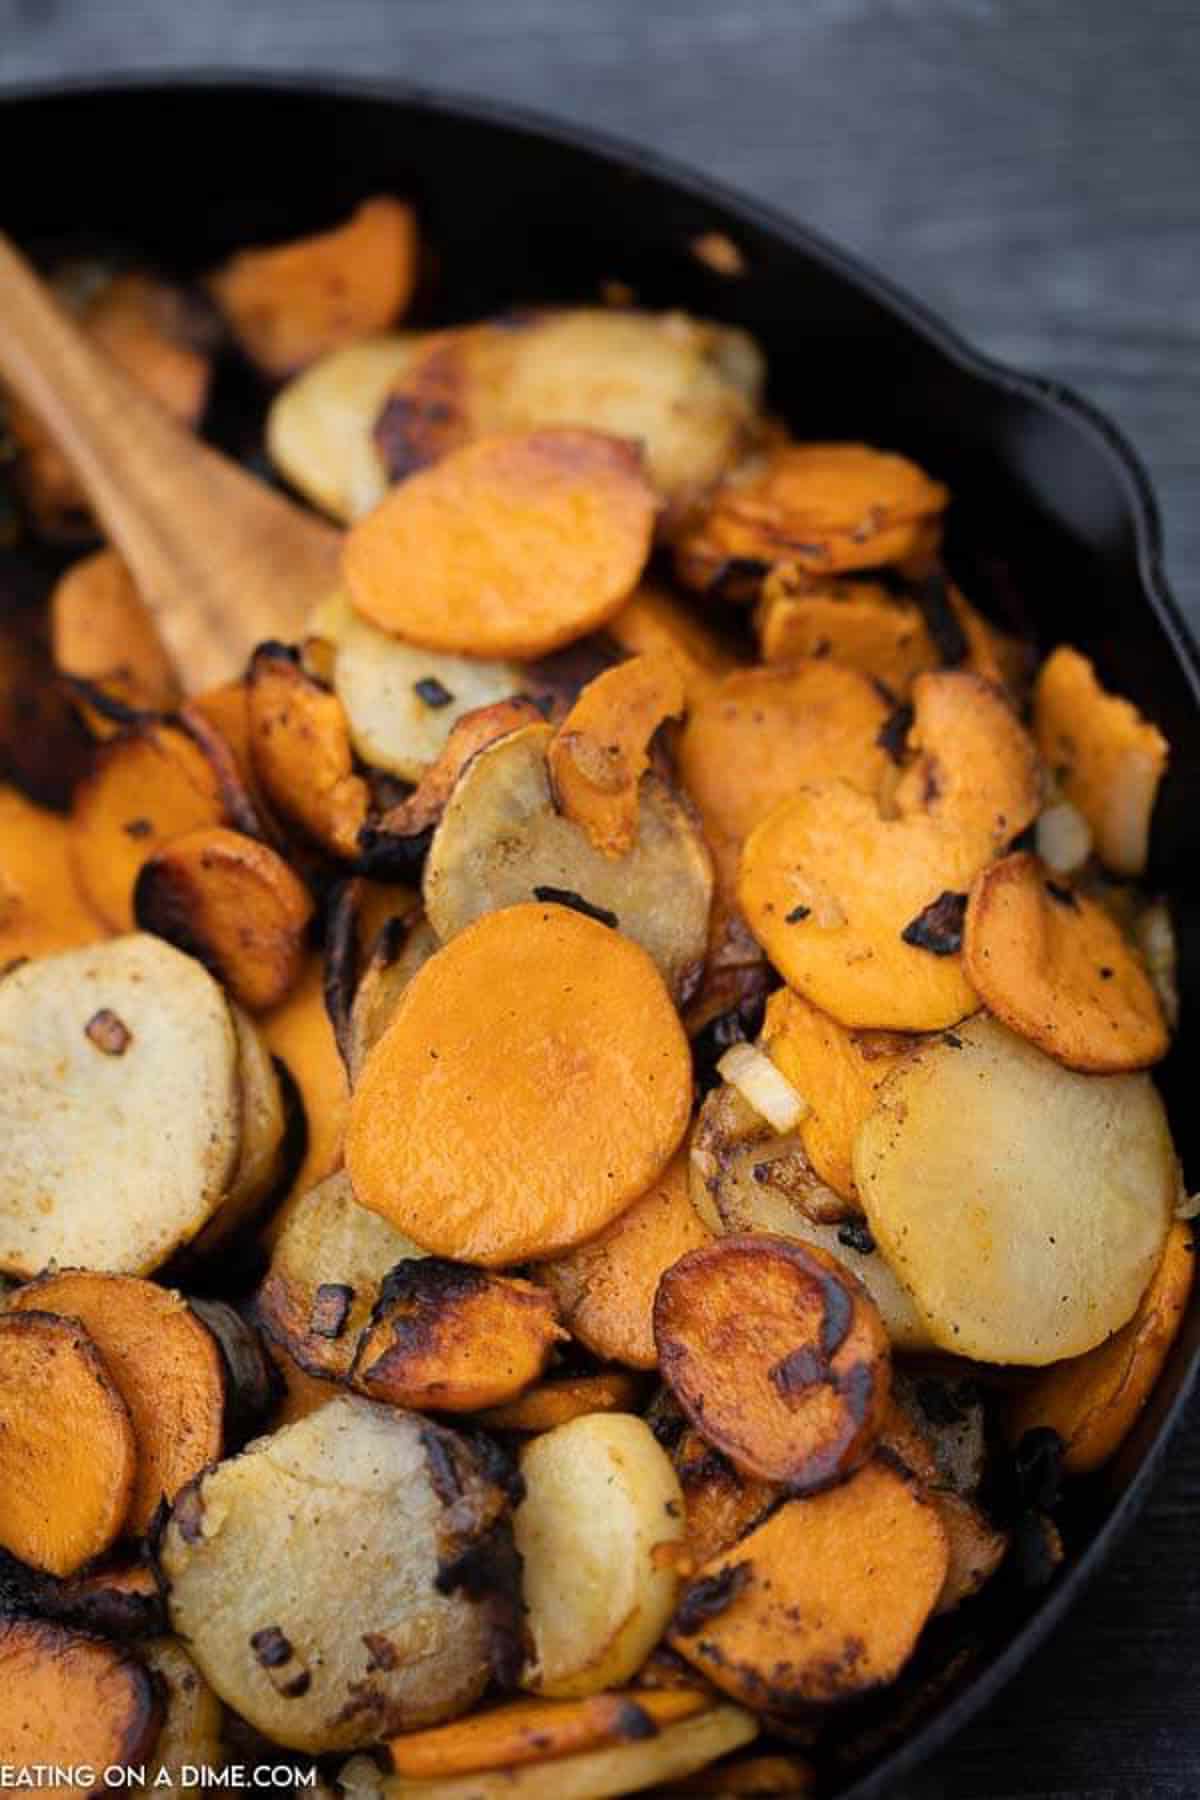 pan fried potatoes and sweet potatoes